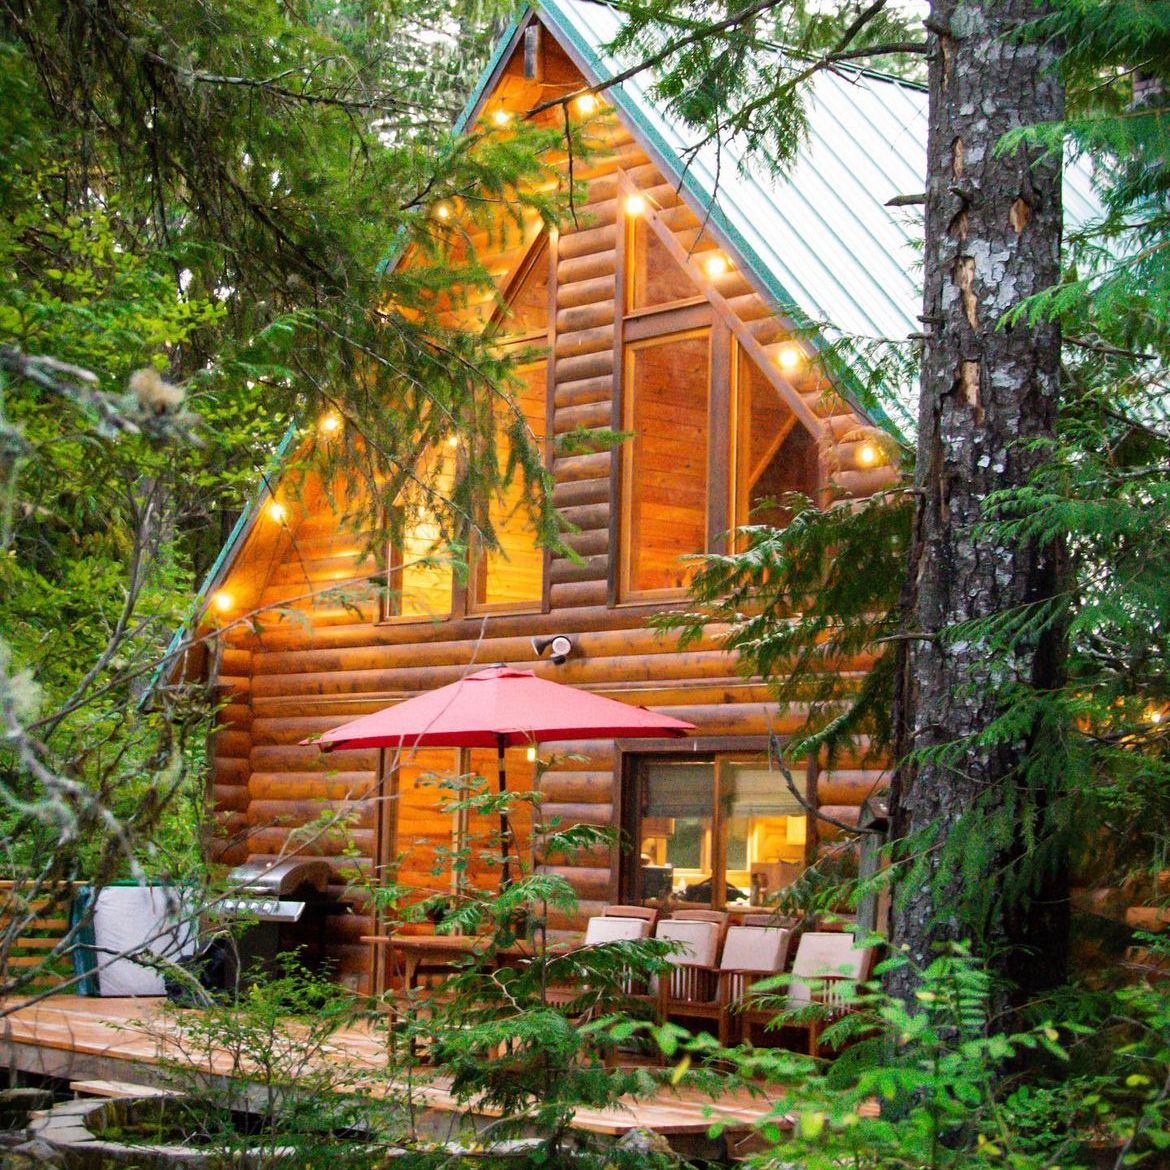 Airbnb listing photo in beautiful Oregon